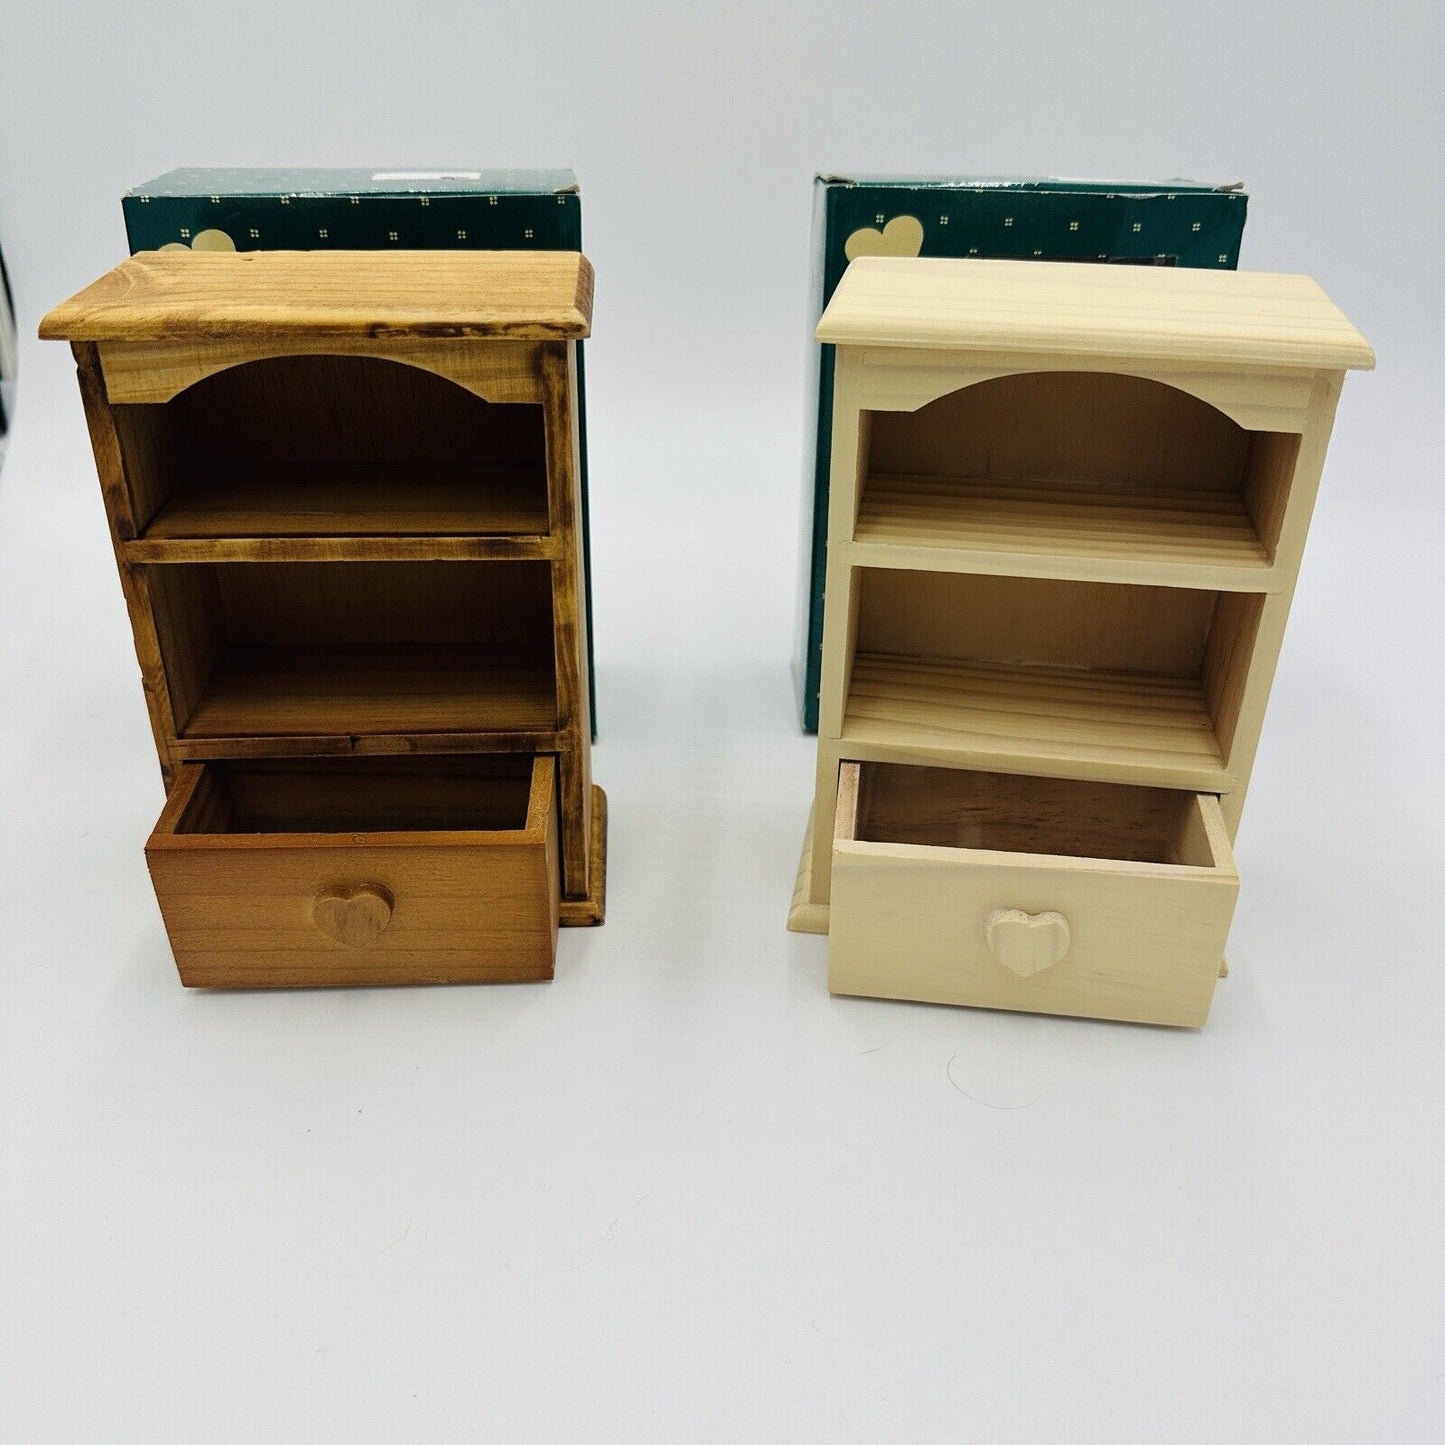 Country Treasure Dollhouse Furniture Mini Wood Cabinet Item 7052  6.5” 1989 Home